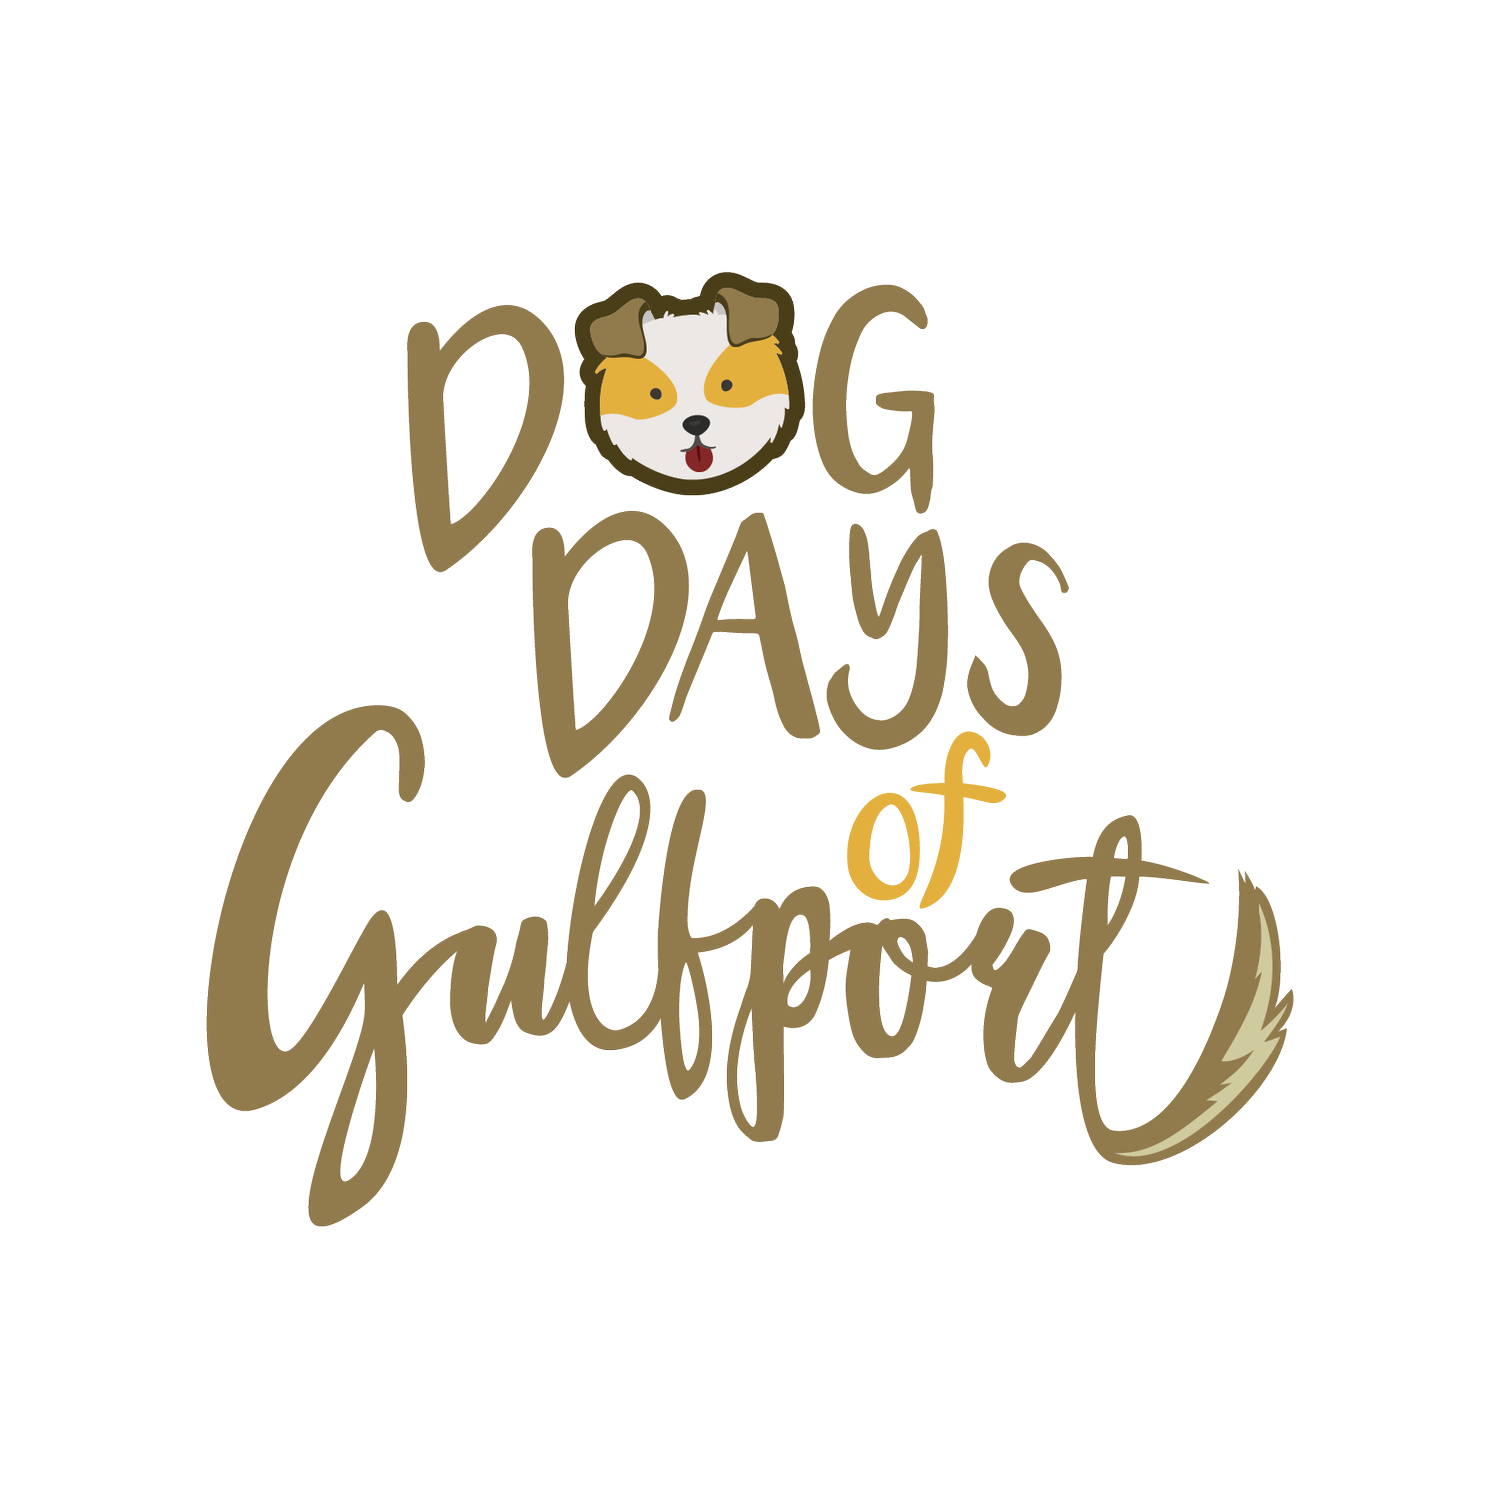 DOG DAYS OF GULFPORT (DDOG)